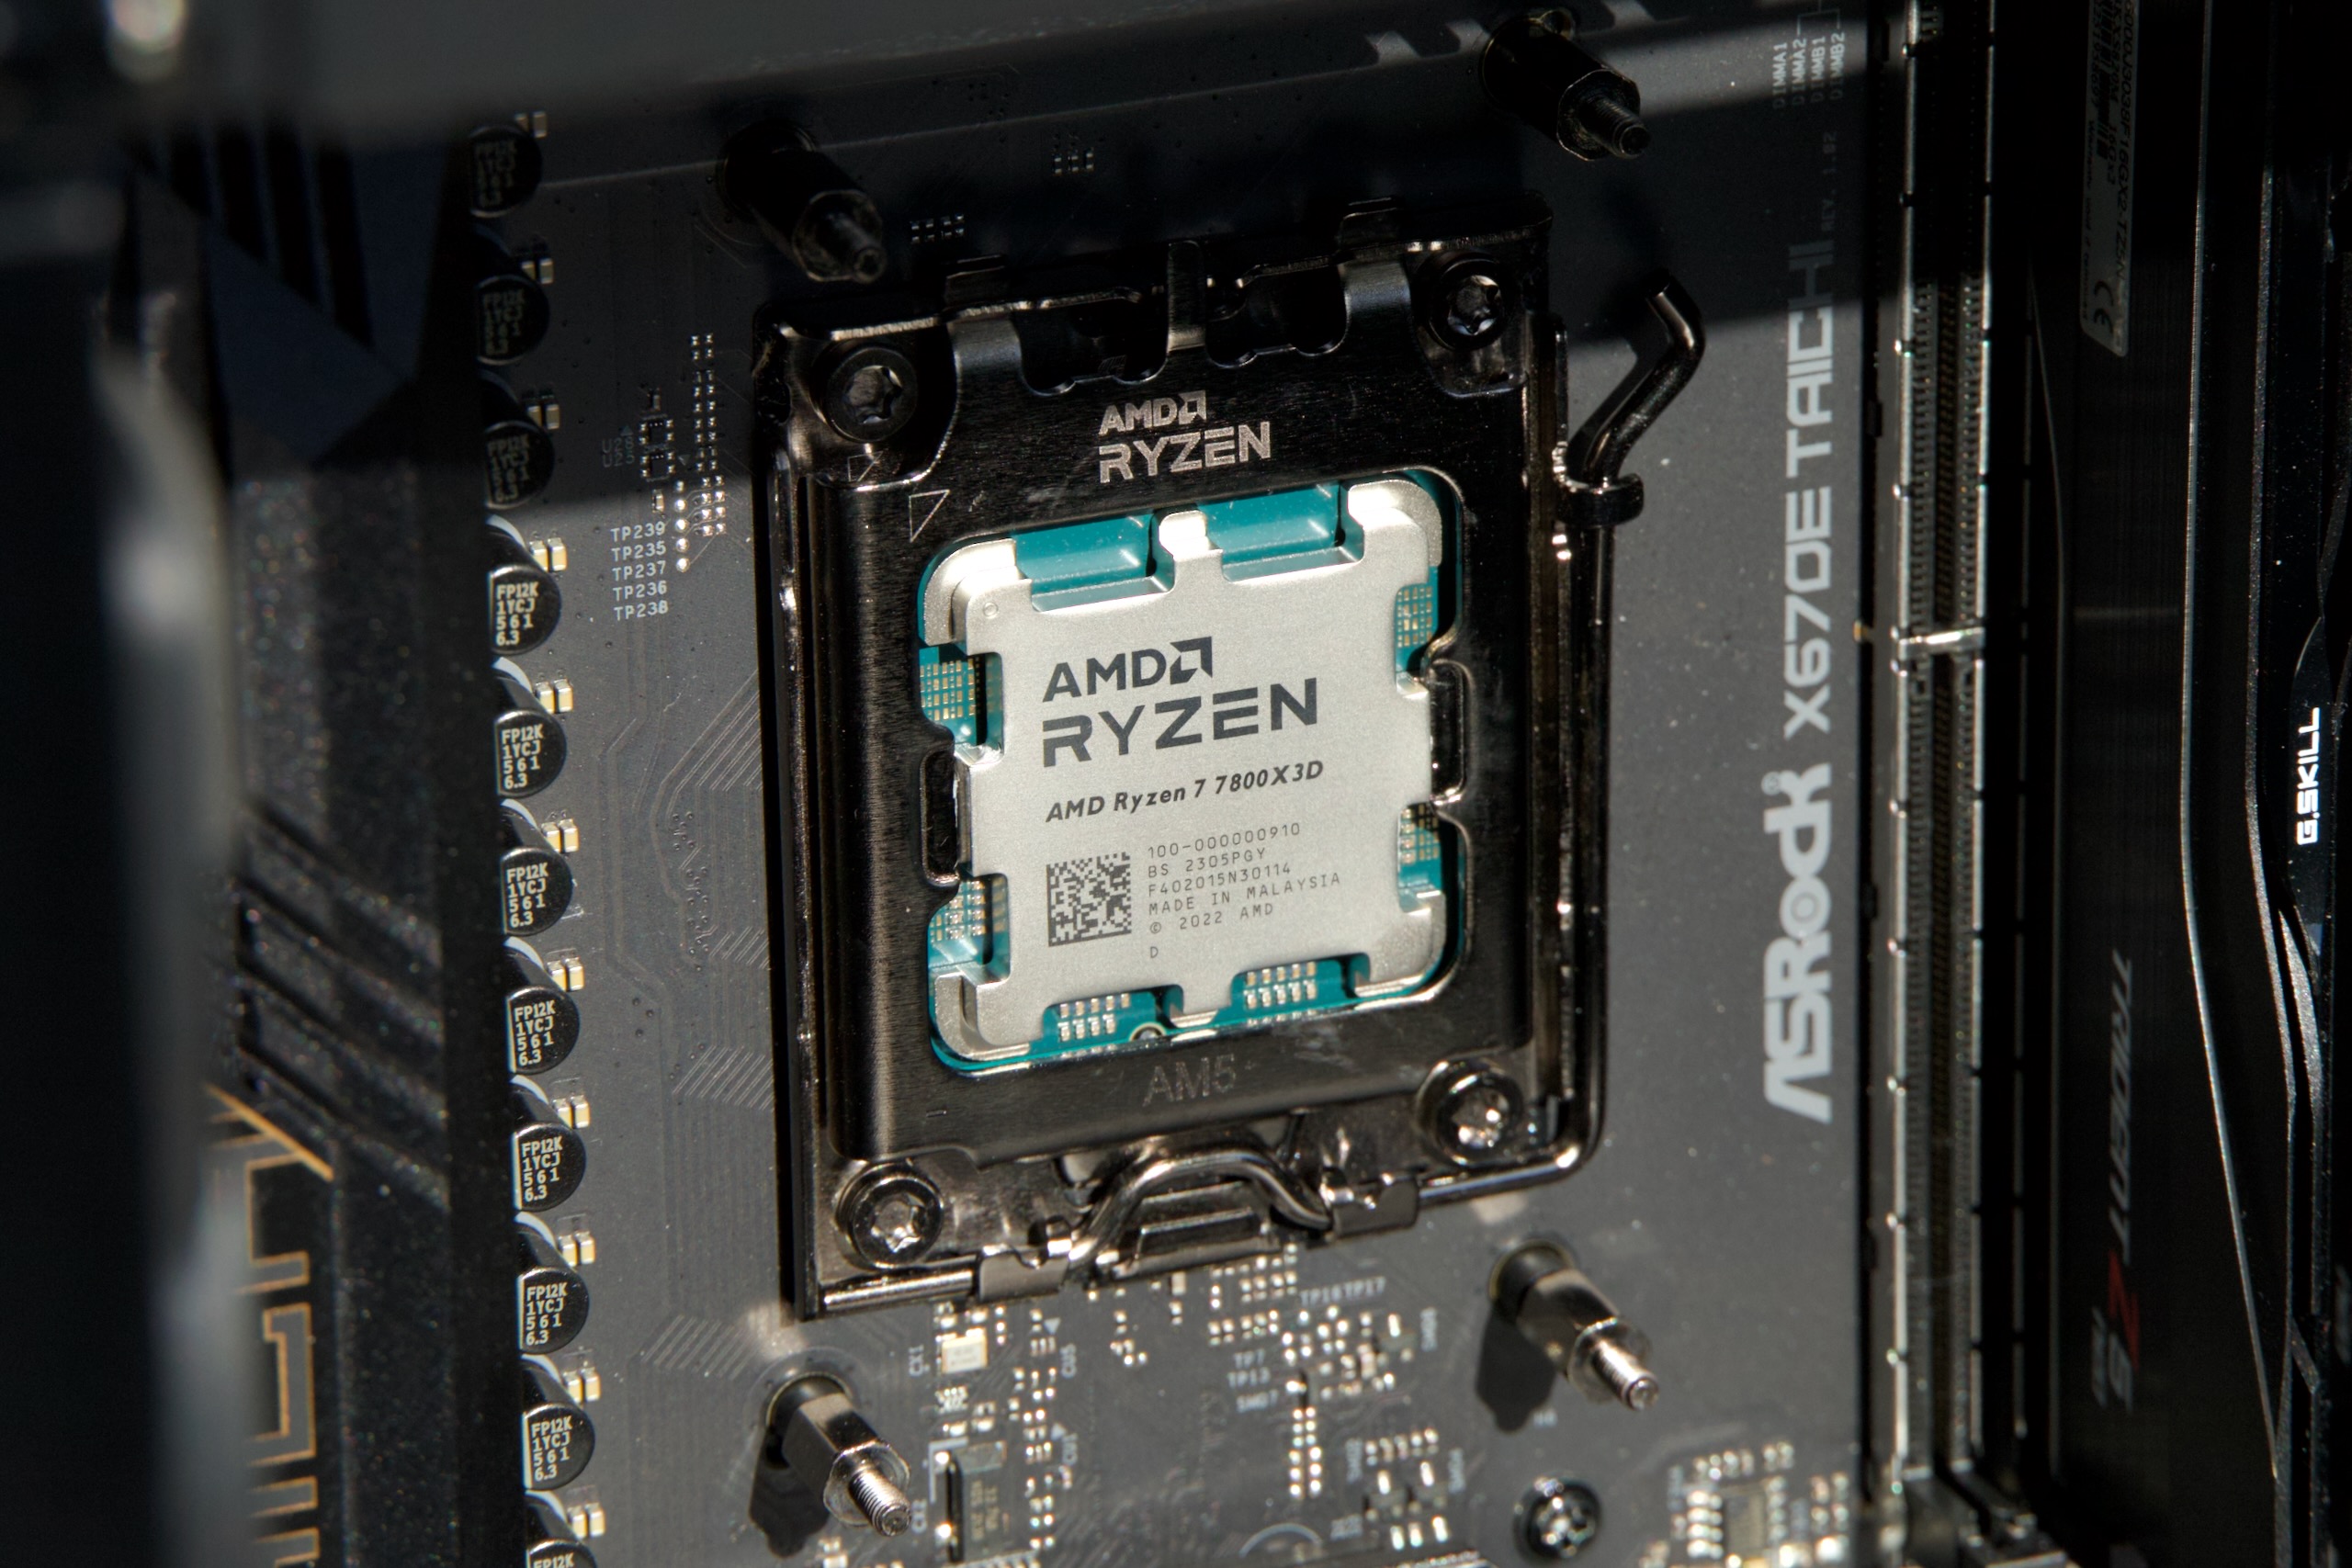 AMD Ryzen 7 7800X3D Review - The Best Gaming CPU